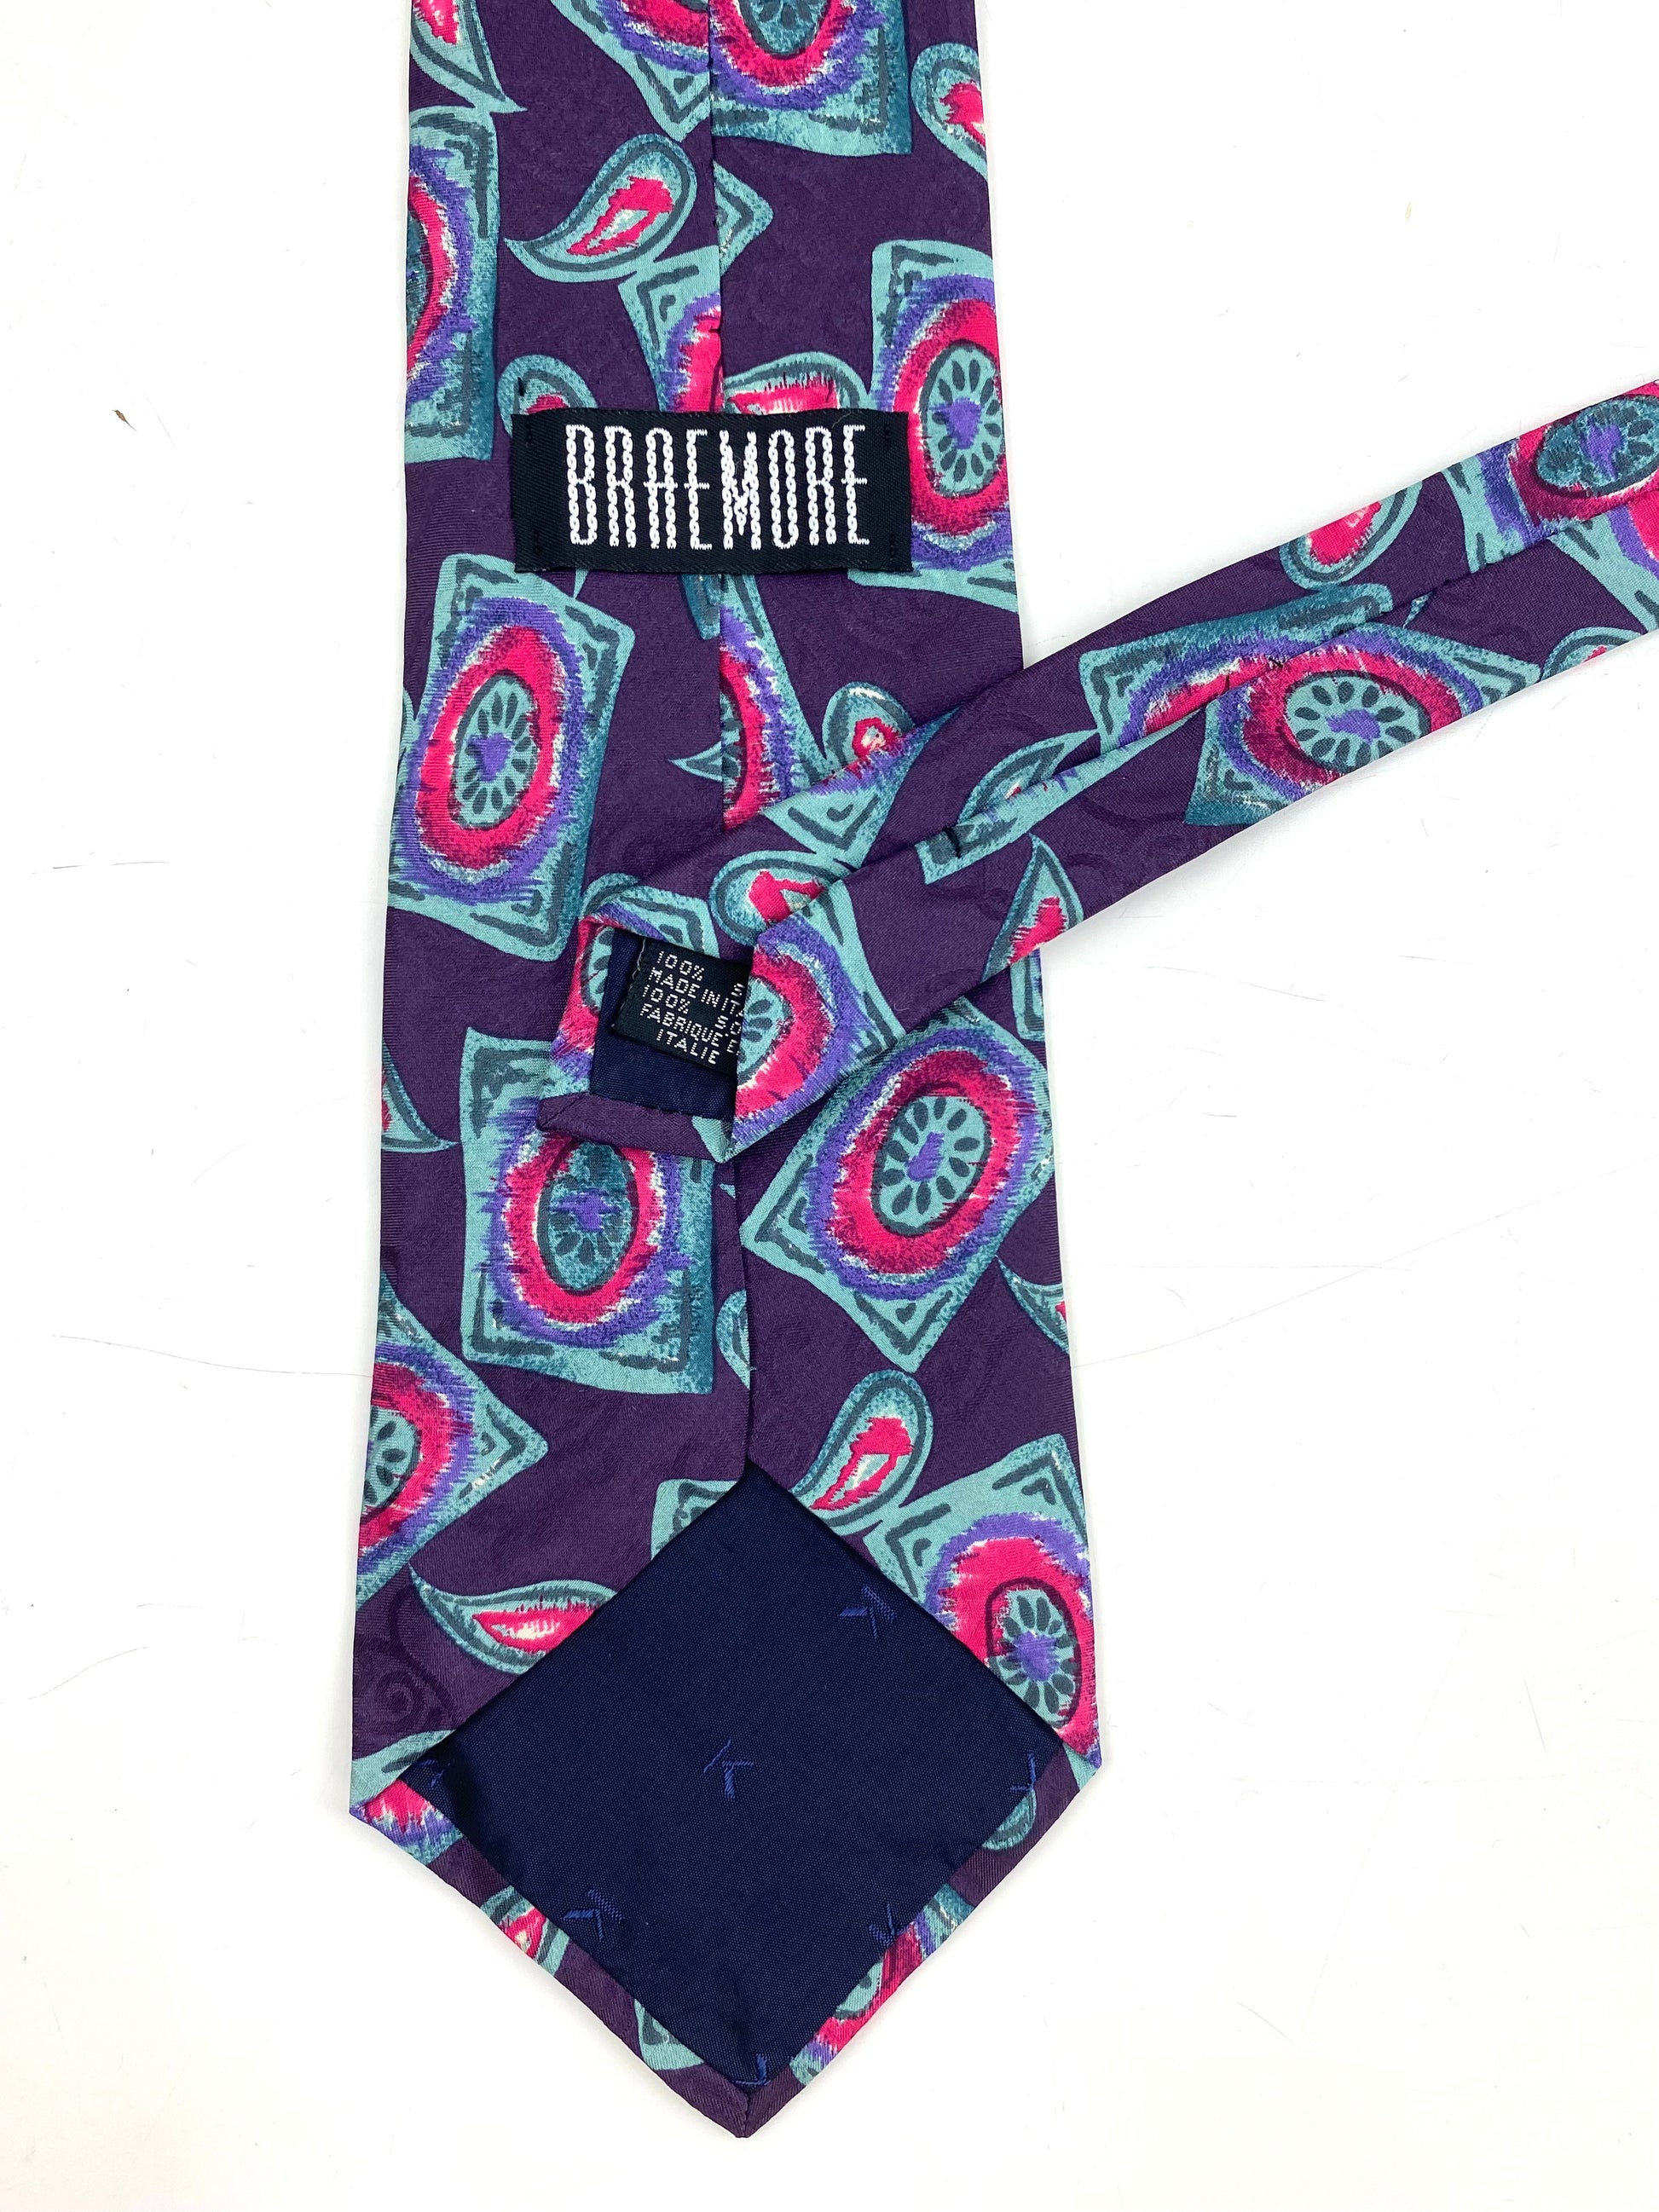 90s Deadstock Silk Necktie, Men's Vintage Purple/ Green/ Pink Geometric Boteh Pattern Tie, NOS